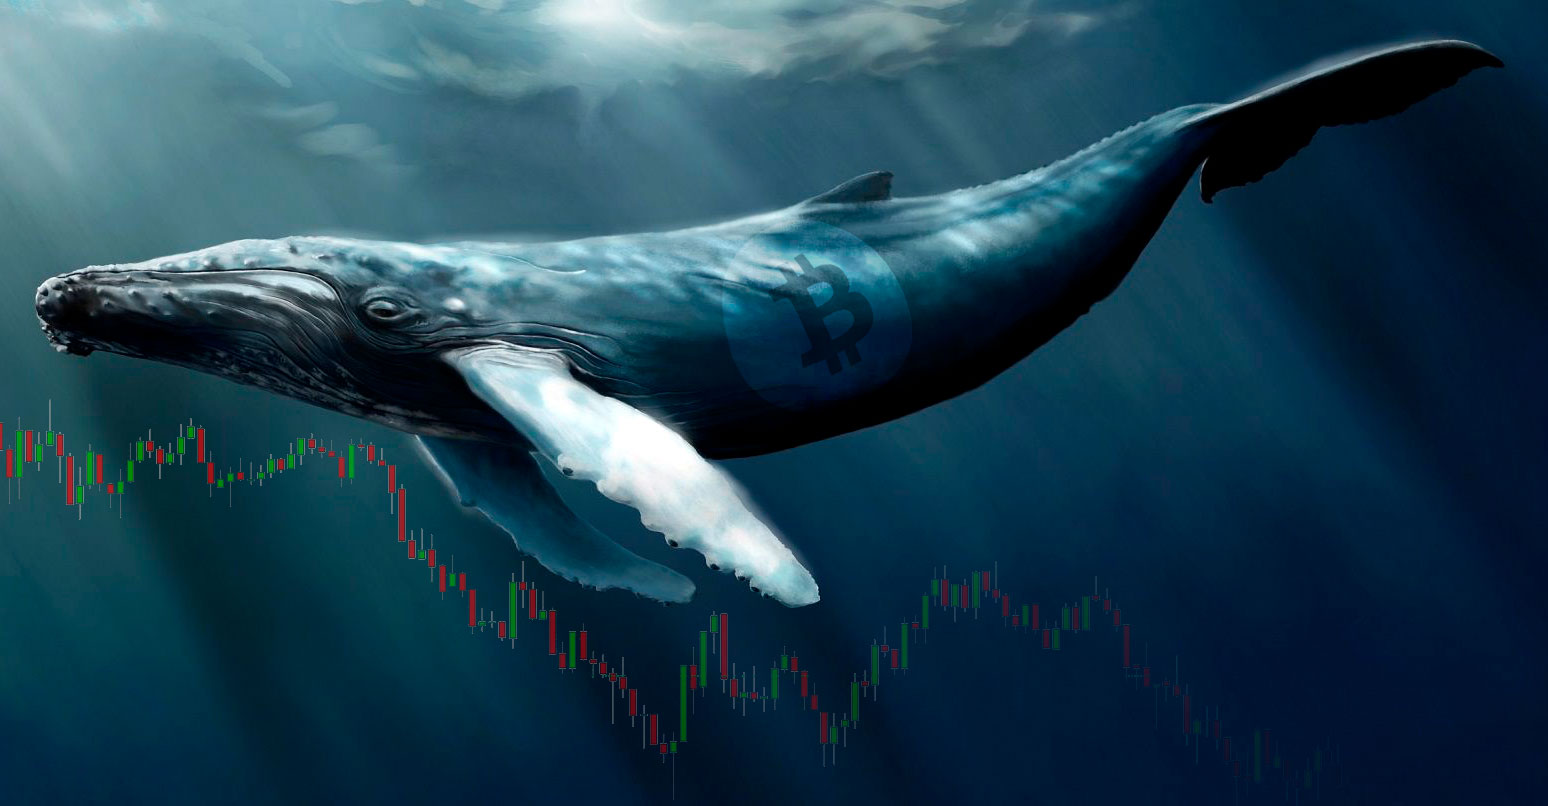 Прогноз курса биткоина 2018 от известных аналитиков. На рынок скоро придут киты с Уолл-стрит